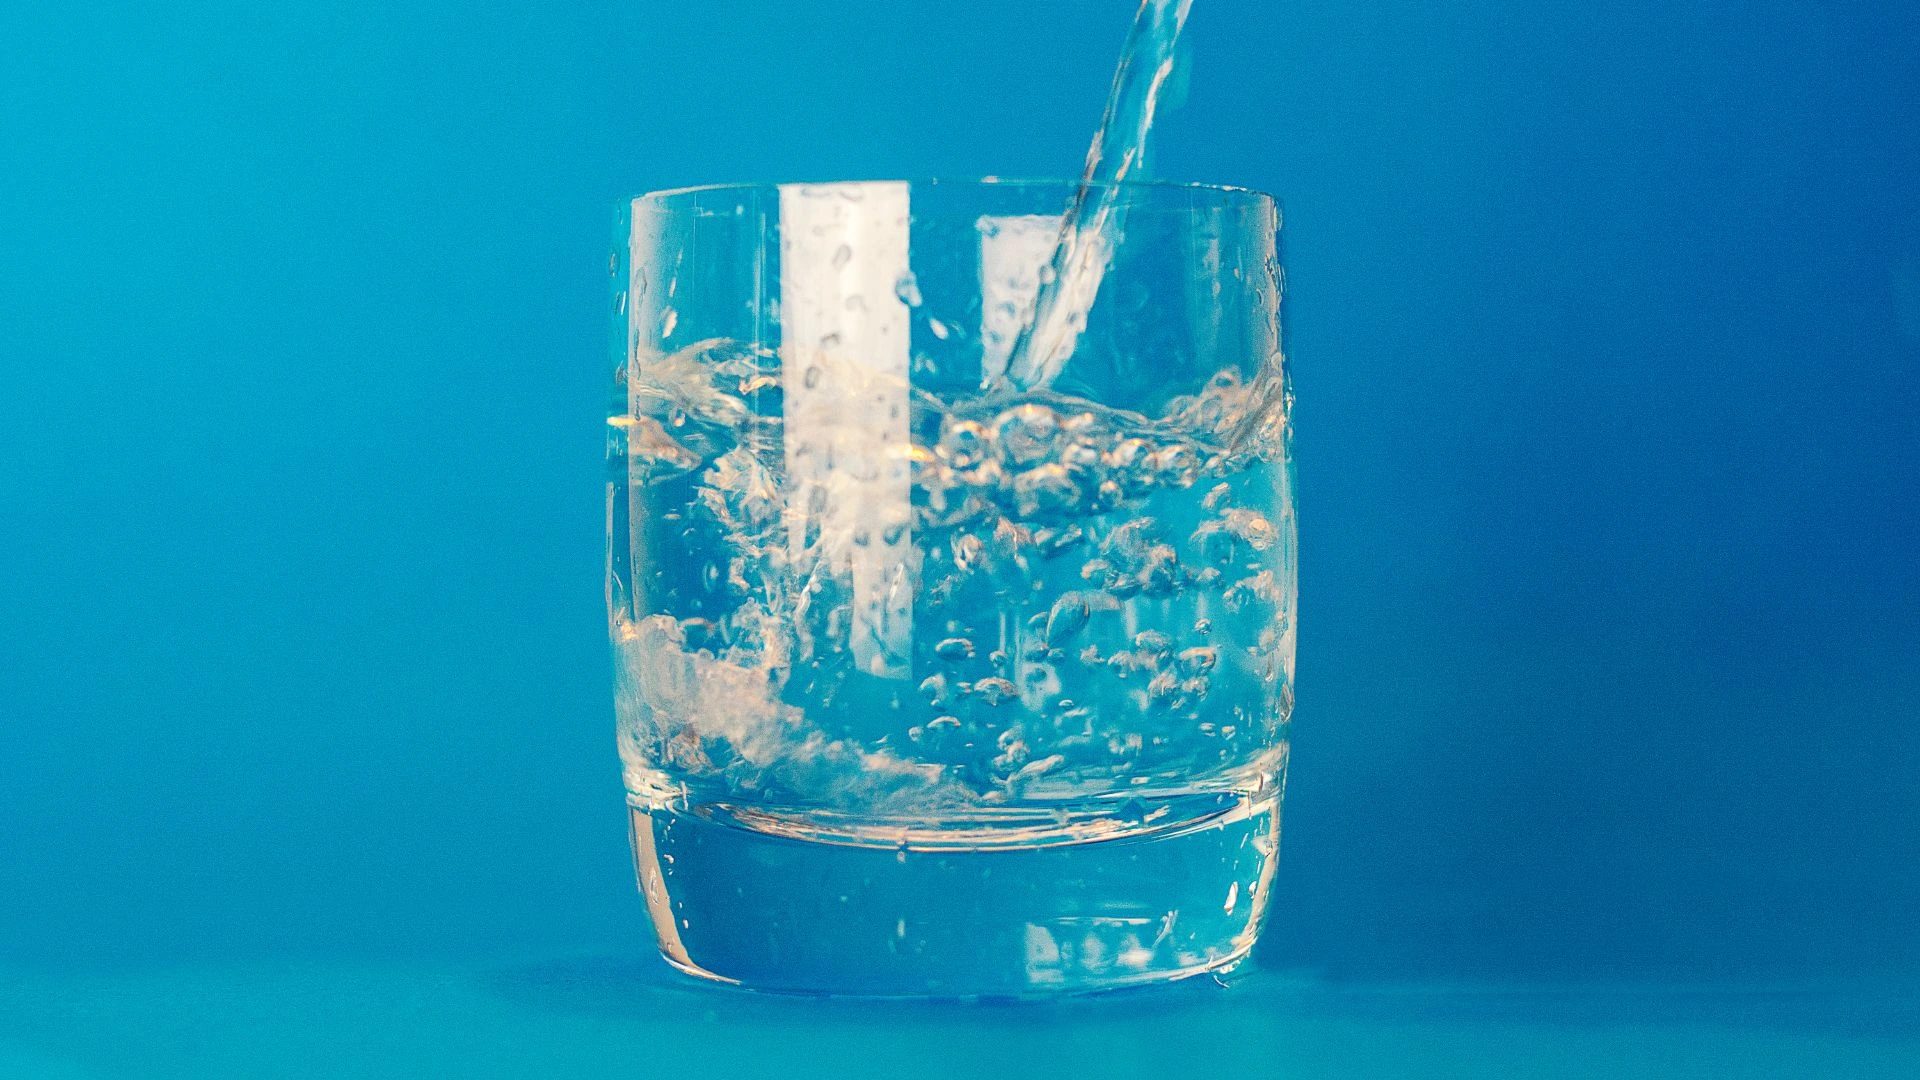  Drinking Water Health